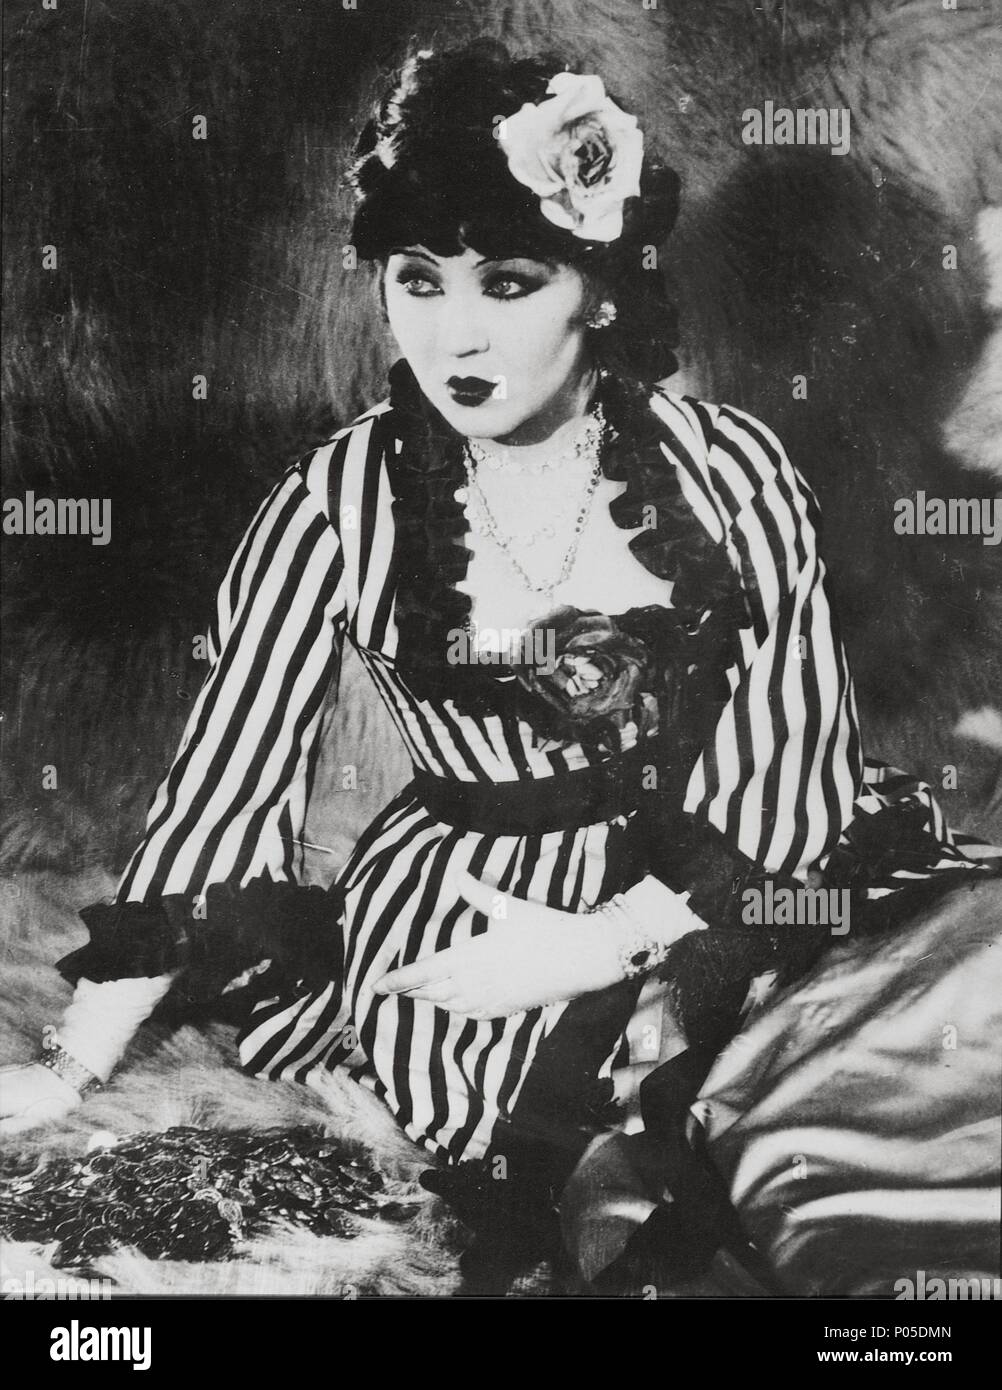 Original Film Title: ANN. English Title: ANN. Film Director: JEAN RENOIR.  Year: 1926. Stars: CATHERINE HESSLING. Credit: FILMS ROITFEID, LES/GIGNO /  Album Stock Photo - Alamy